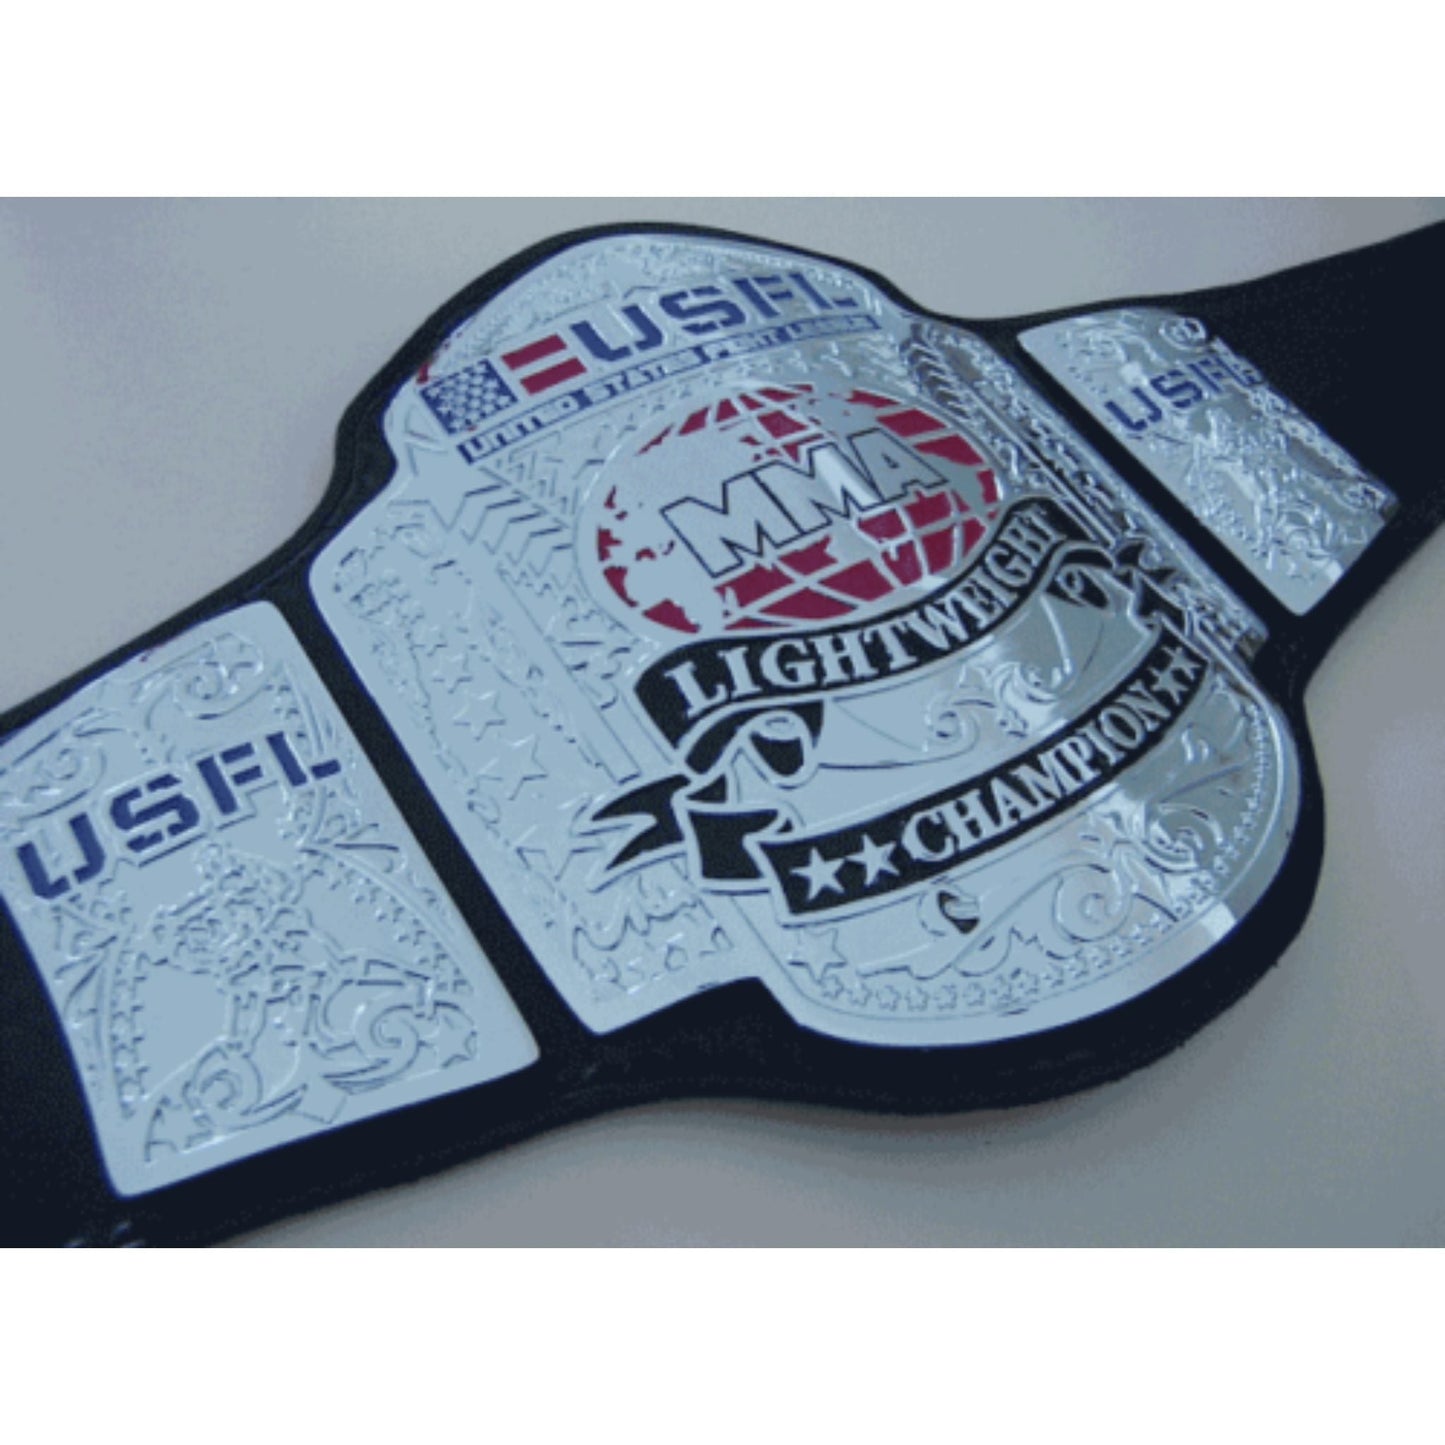 USFL MMA Light Weight Championship Replica Title Belt